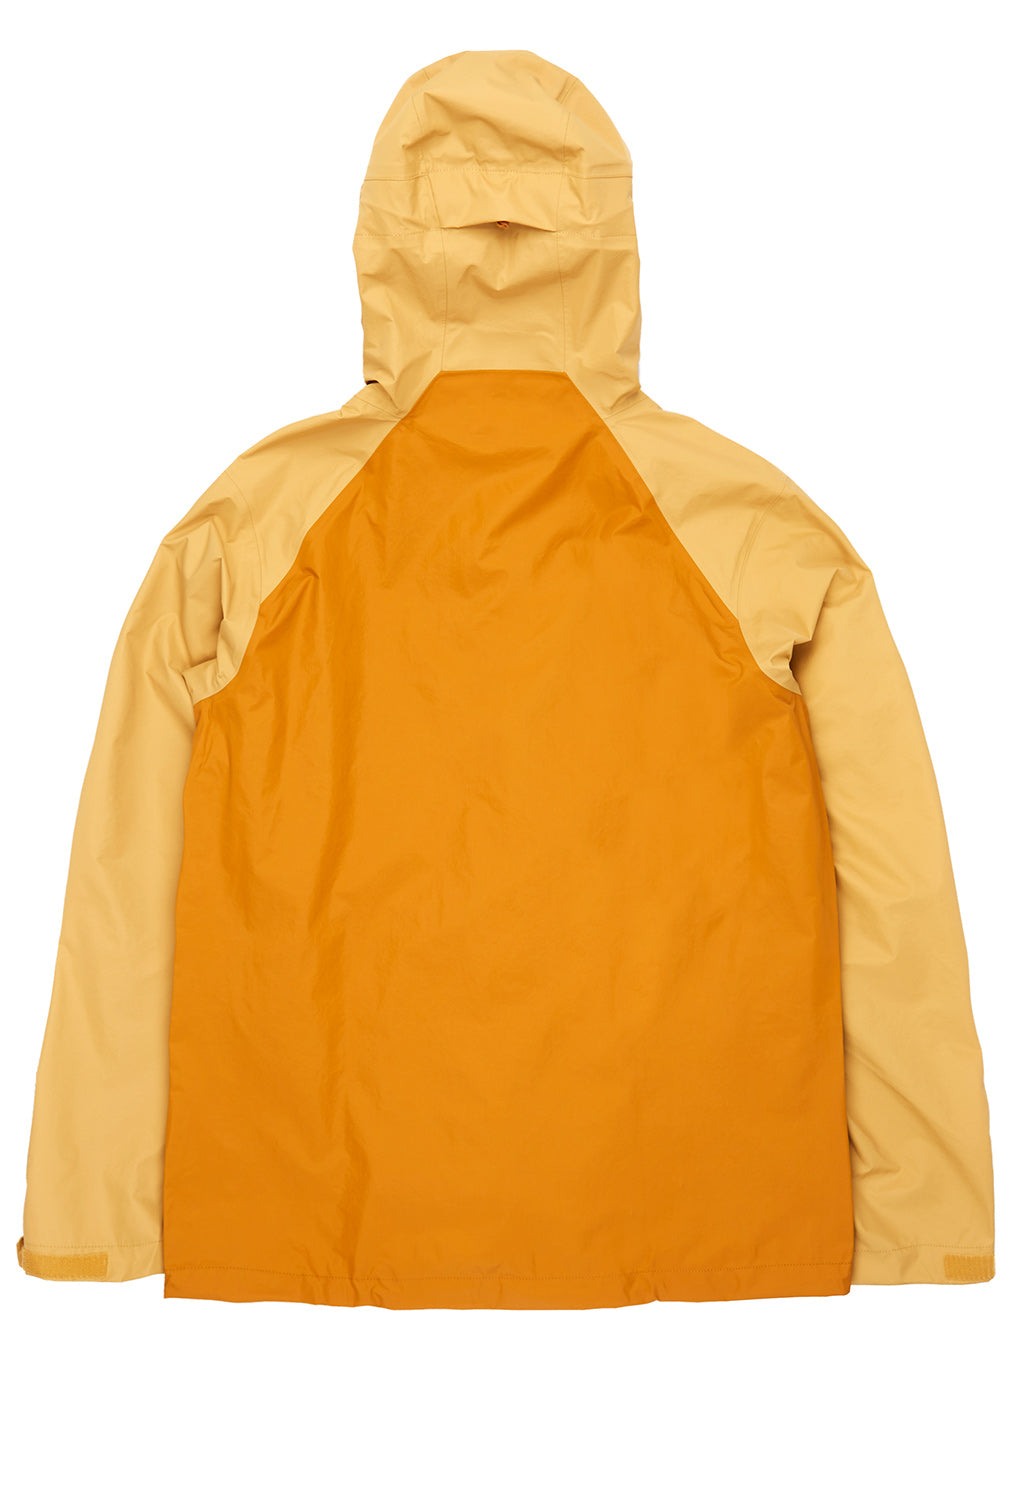 Patagonia Men's Torrentshell 3L Rain Jacket - Golden Caramel